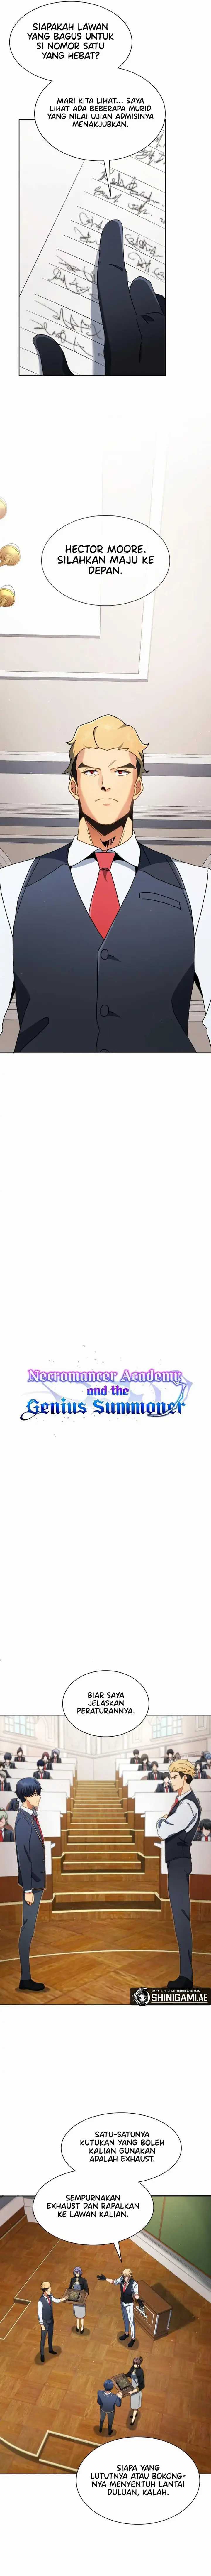 Necromancer Academy’s Genius Summoner Chapter 9